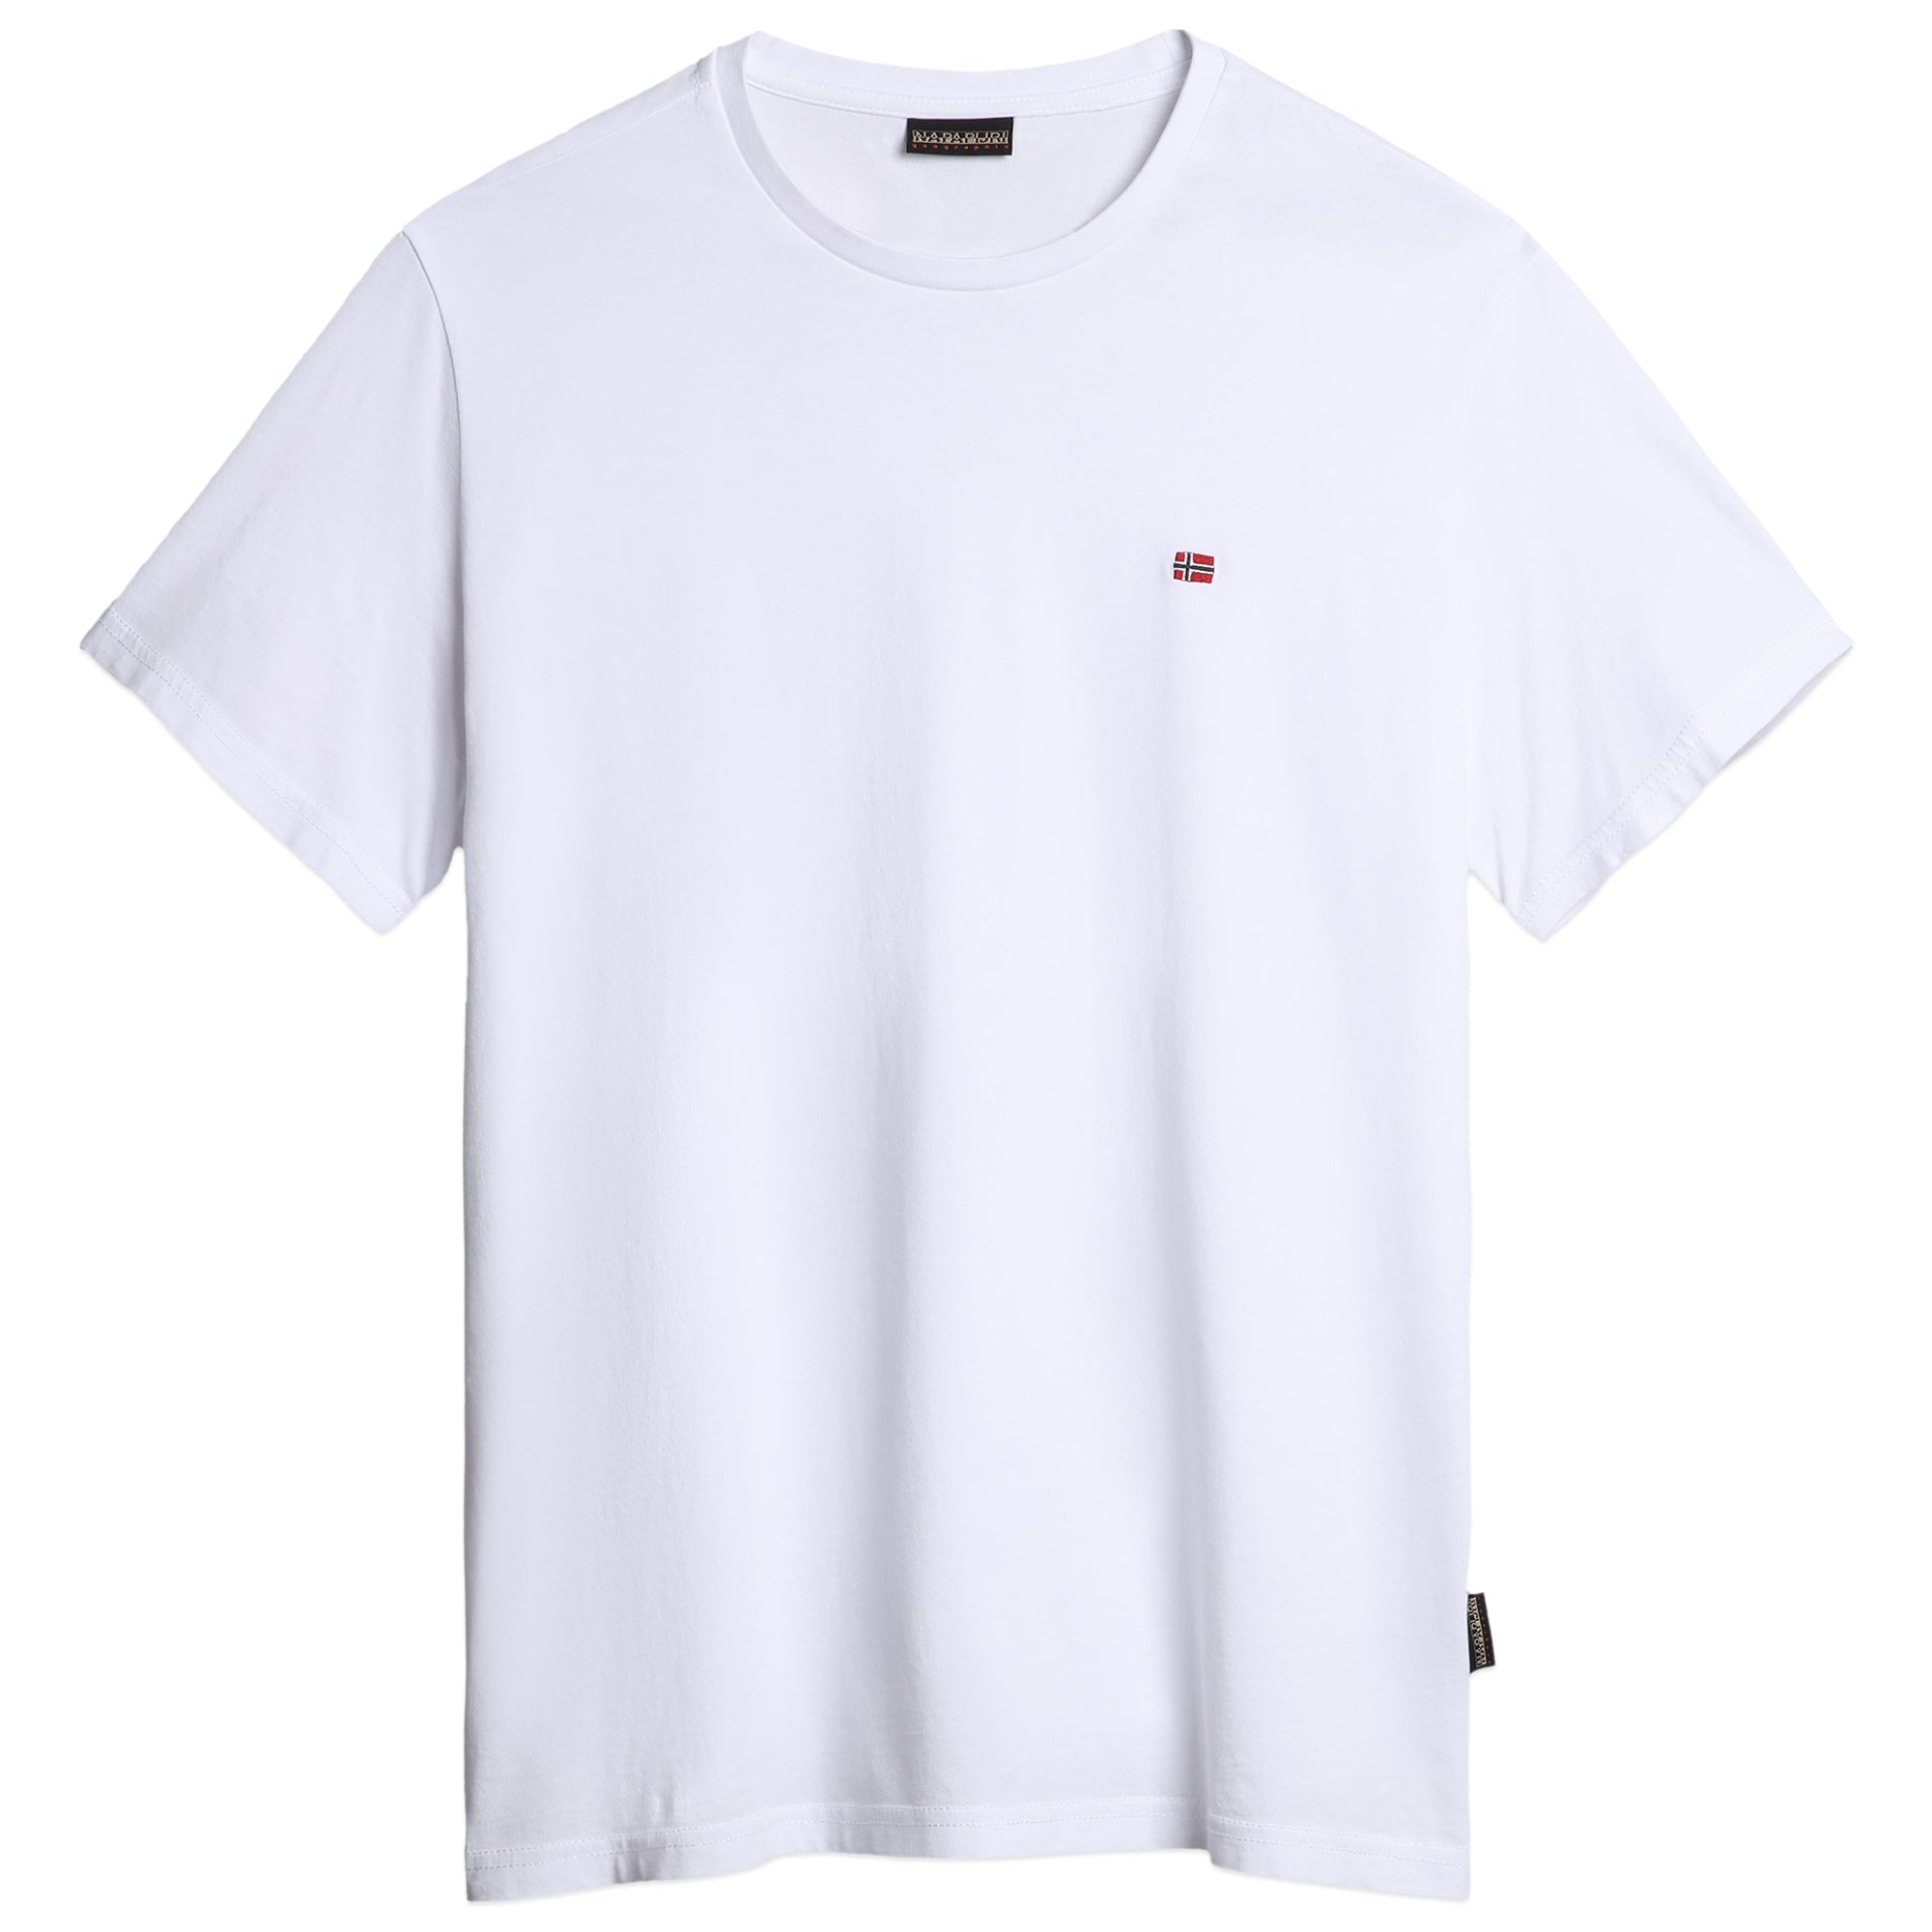 Napapijri Salis Norwegian Flag T-Shirt - White